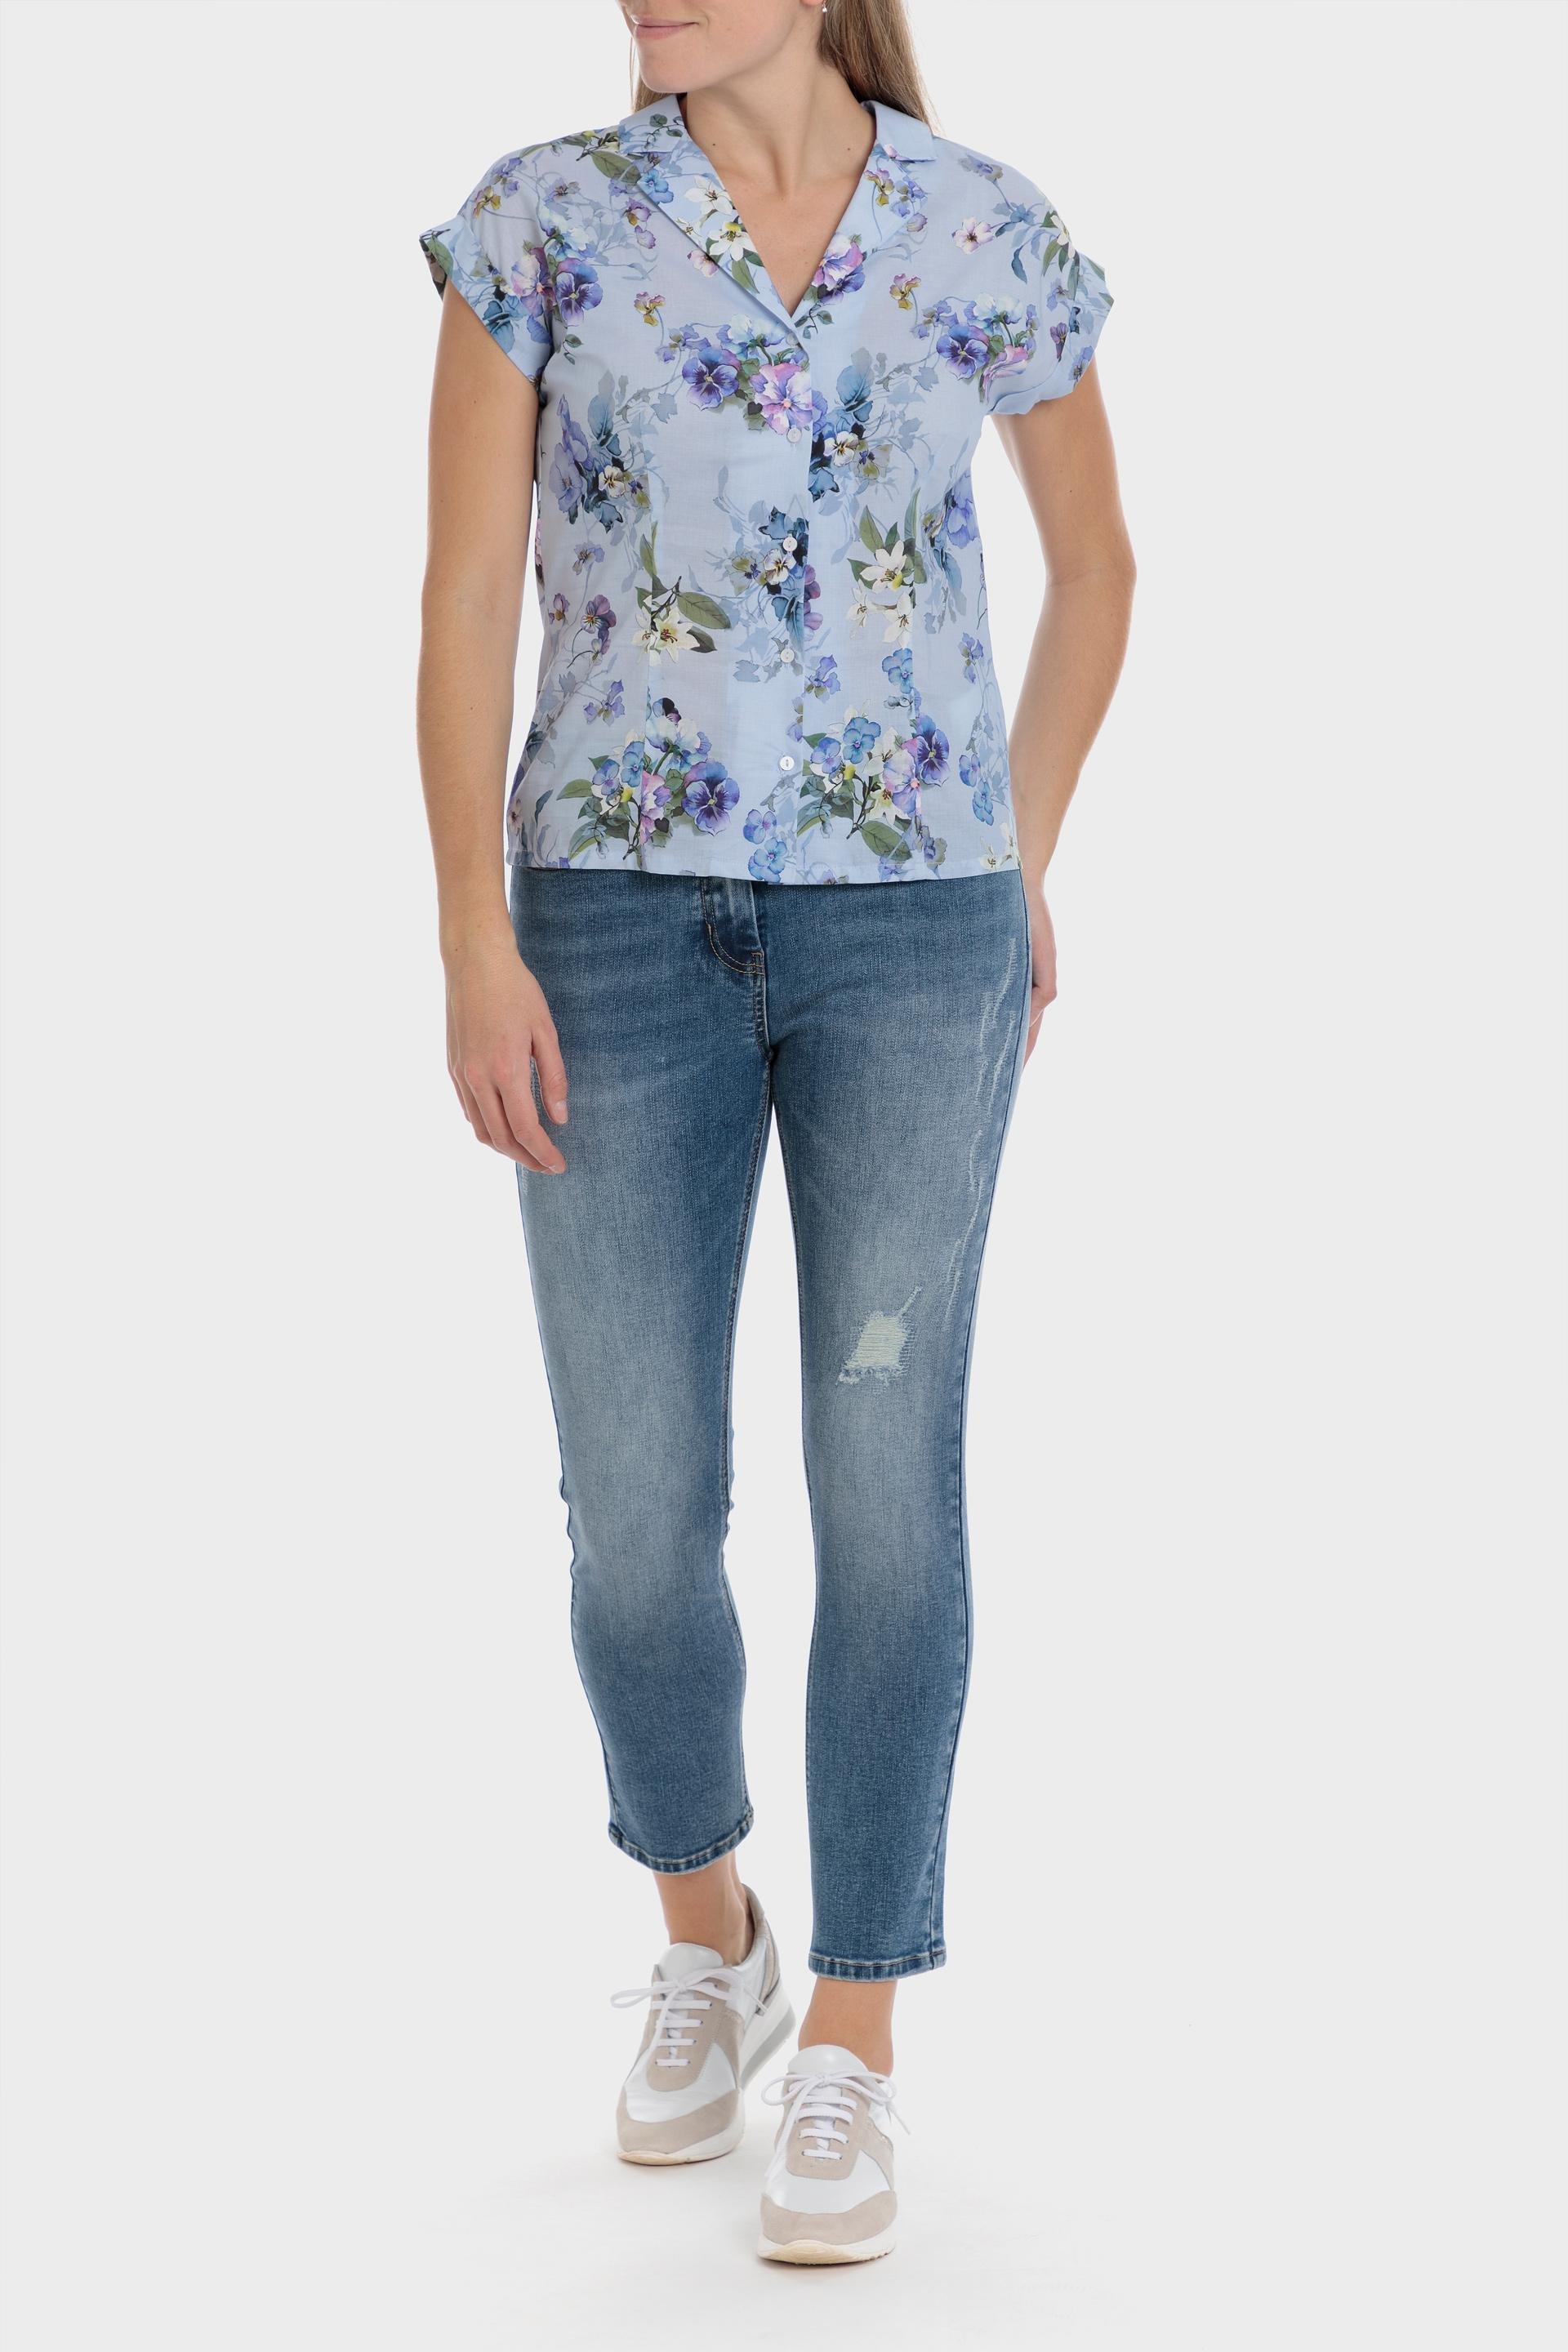 Punt Roma - Blue Floral Print Shirt